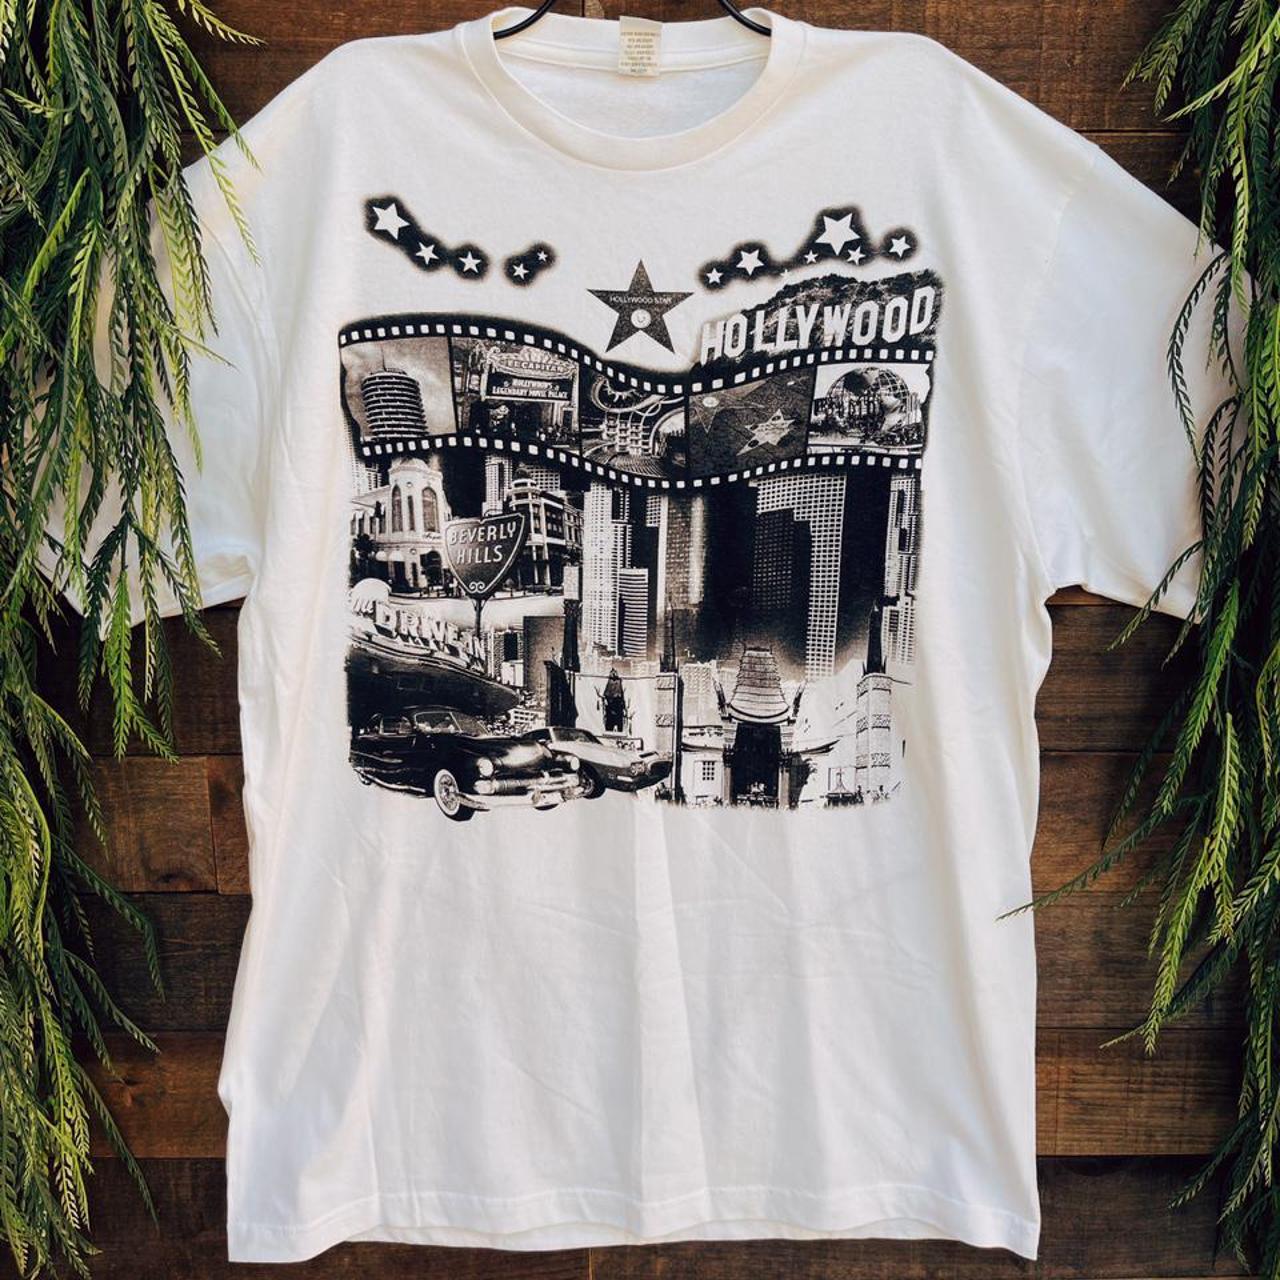 Product Image 1 - 🌵🤘🏻 Vintage Hollywood T-shirt 🤘🏻🌵

📦